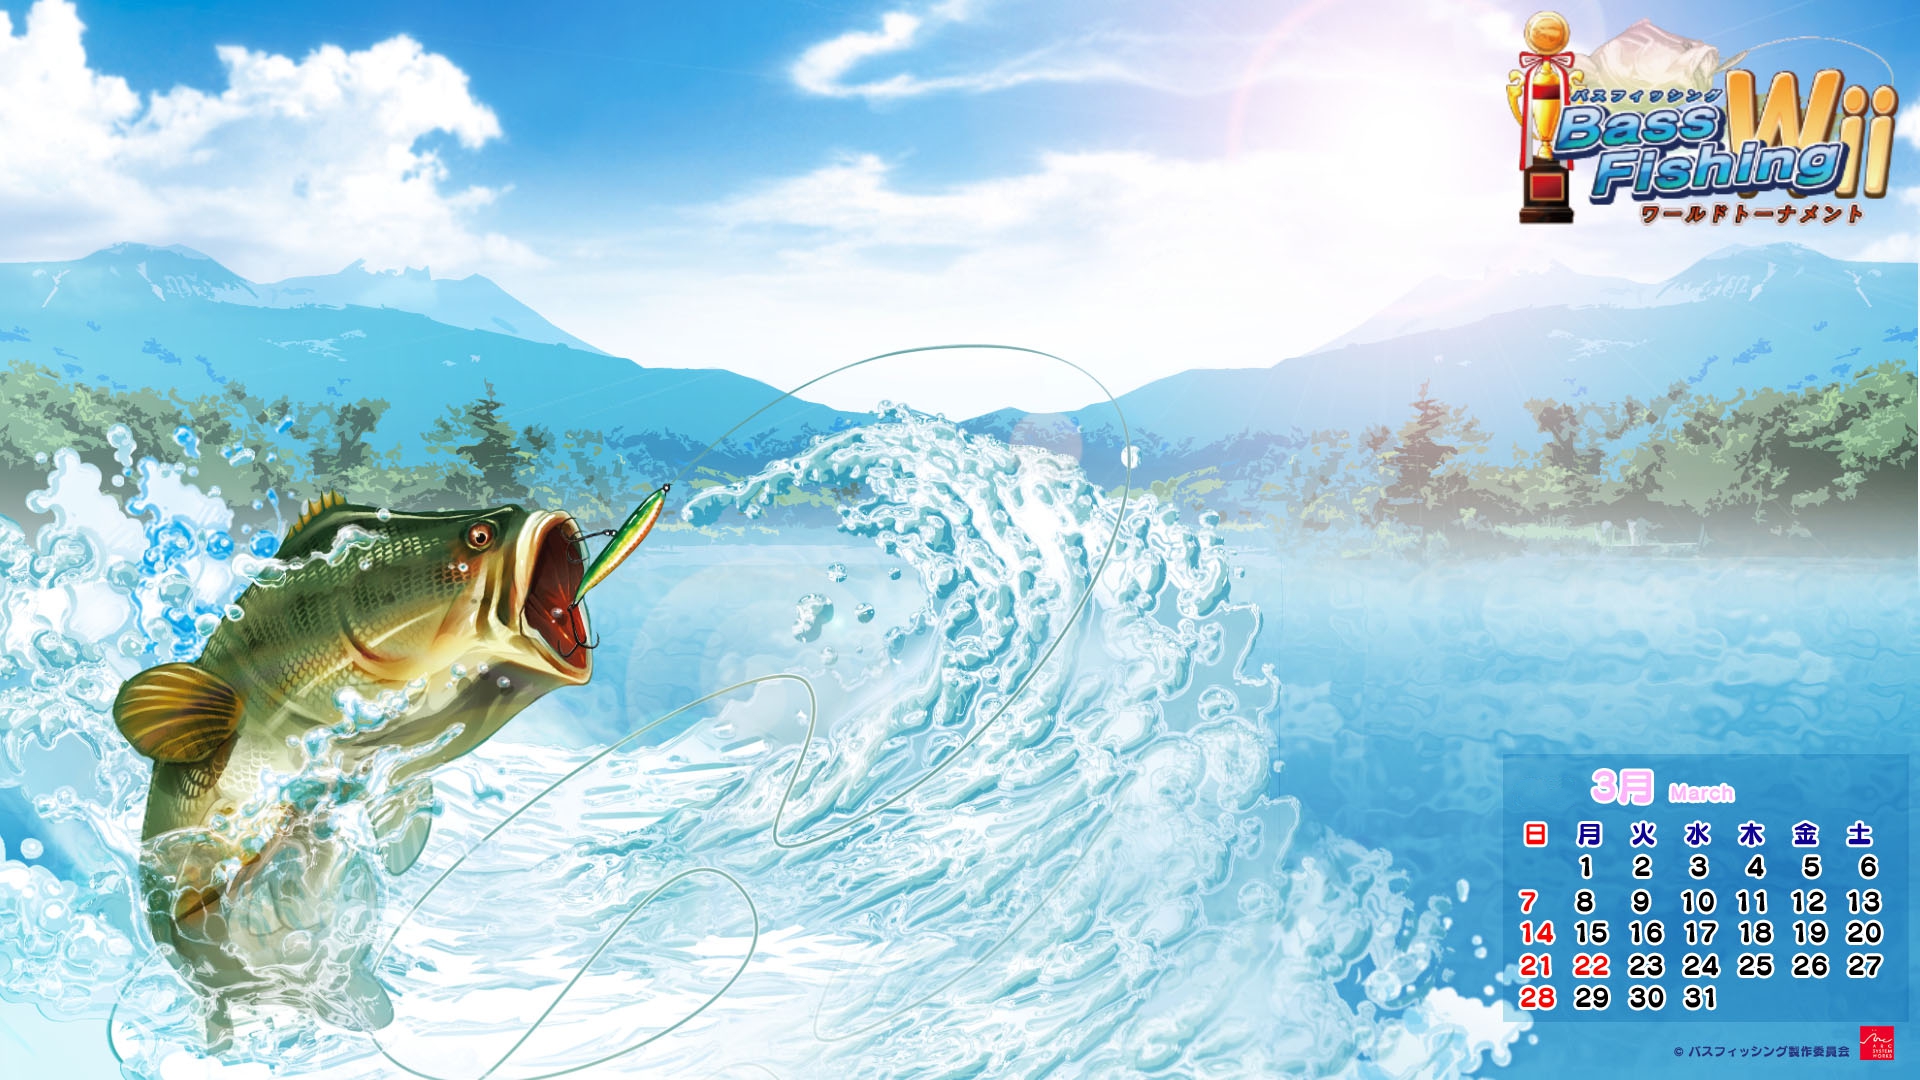 Bass Fishing Background for Desktop 